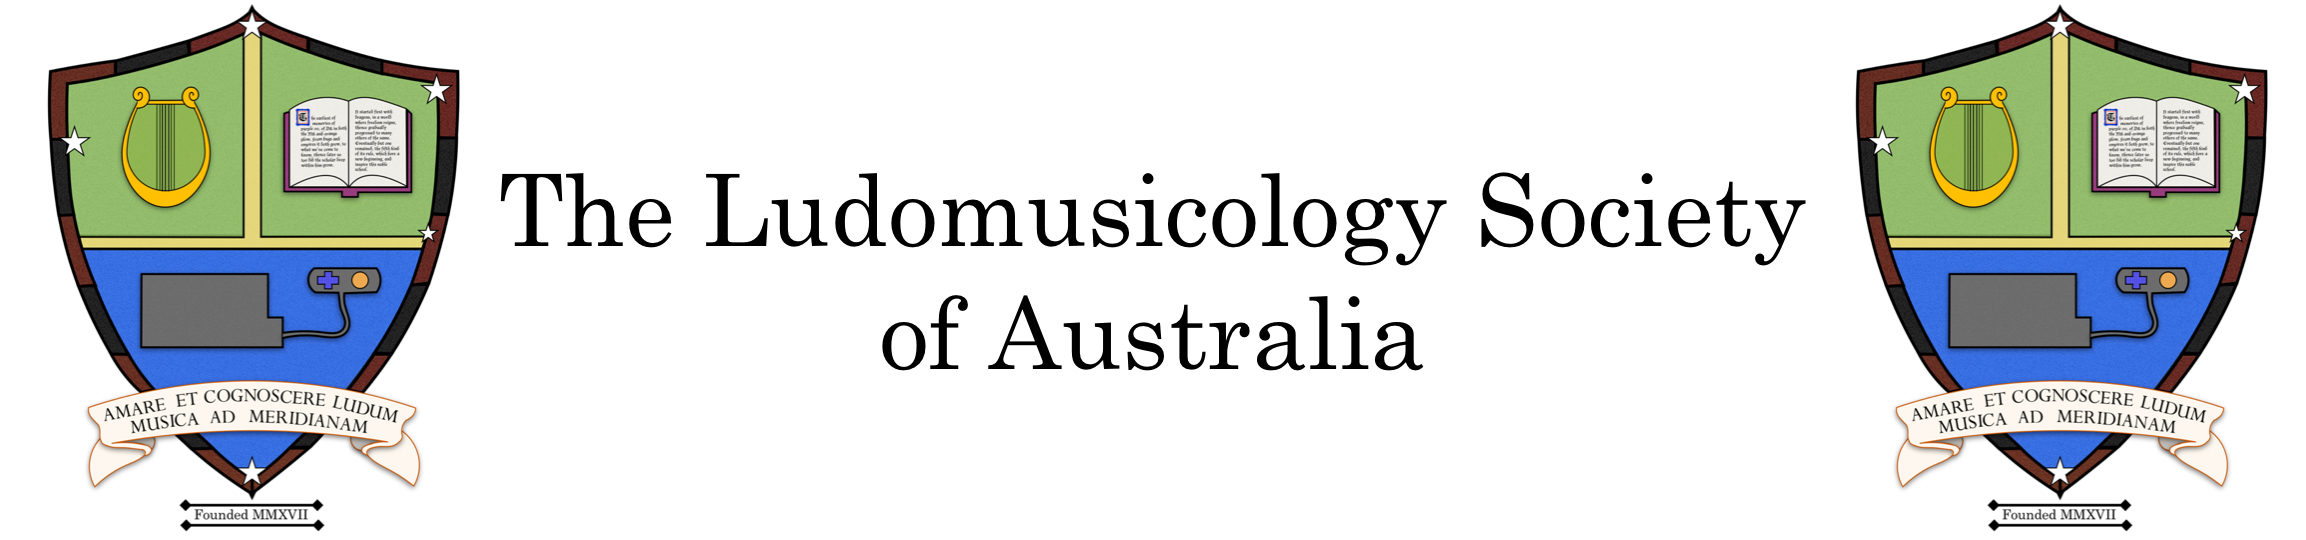 The Ludomusicology Society of Australia